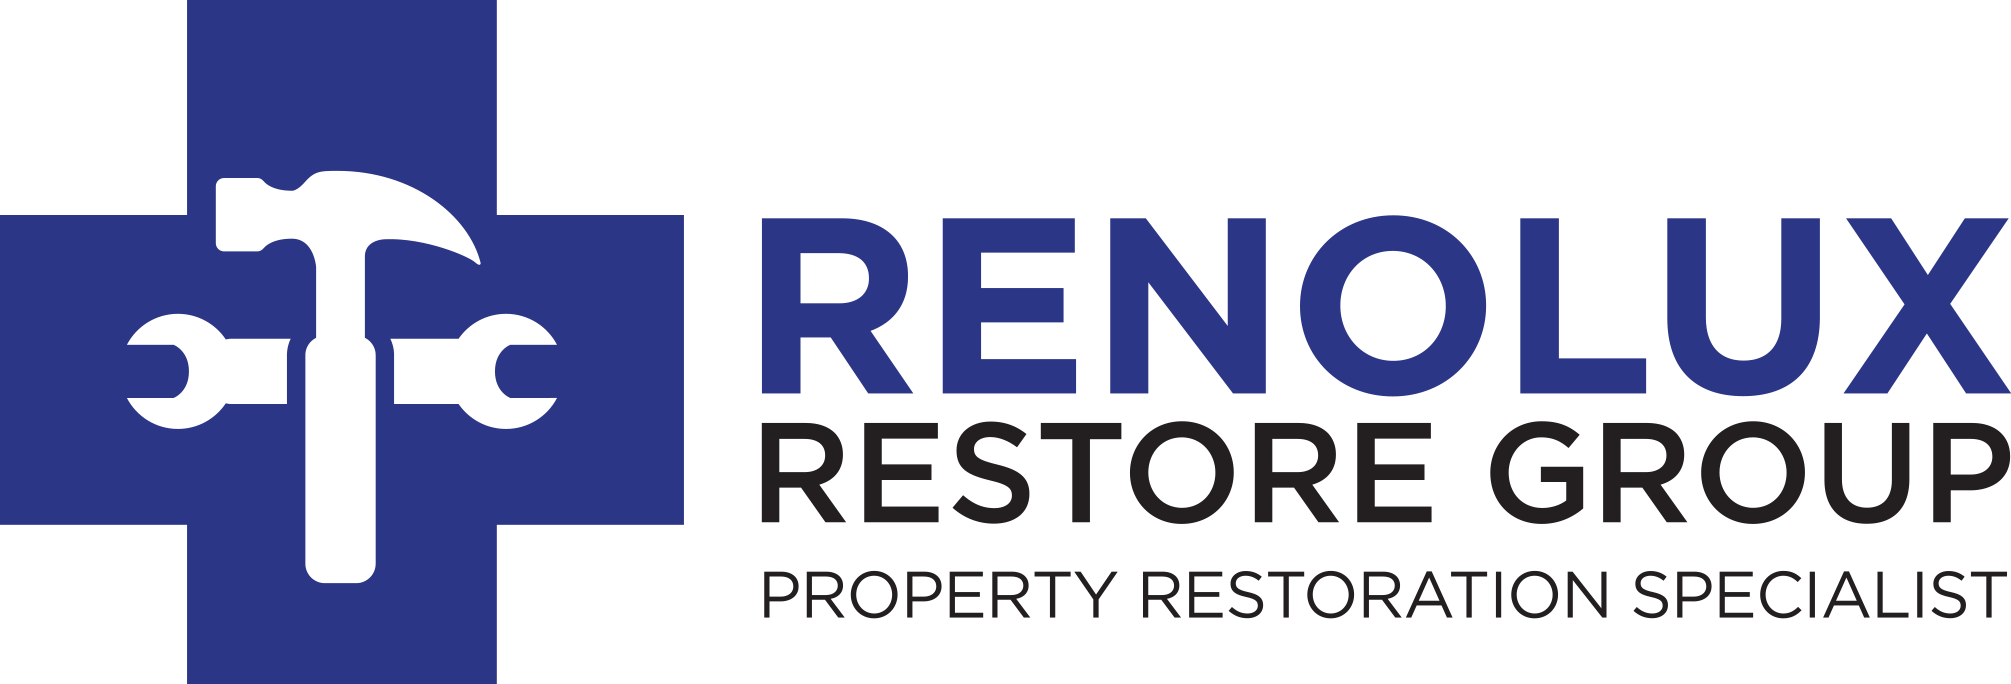 Renolux Restore Group